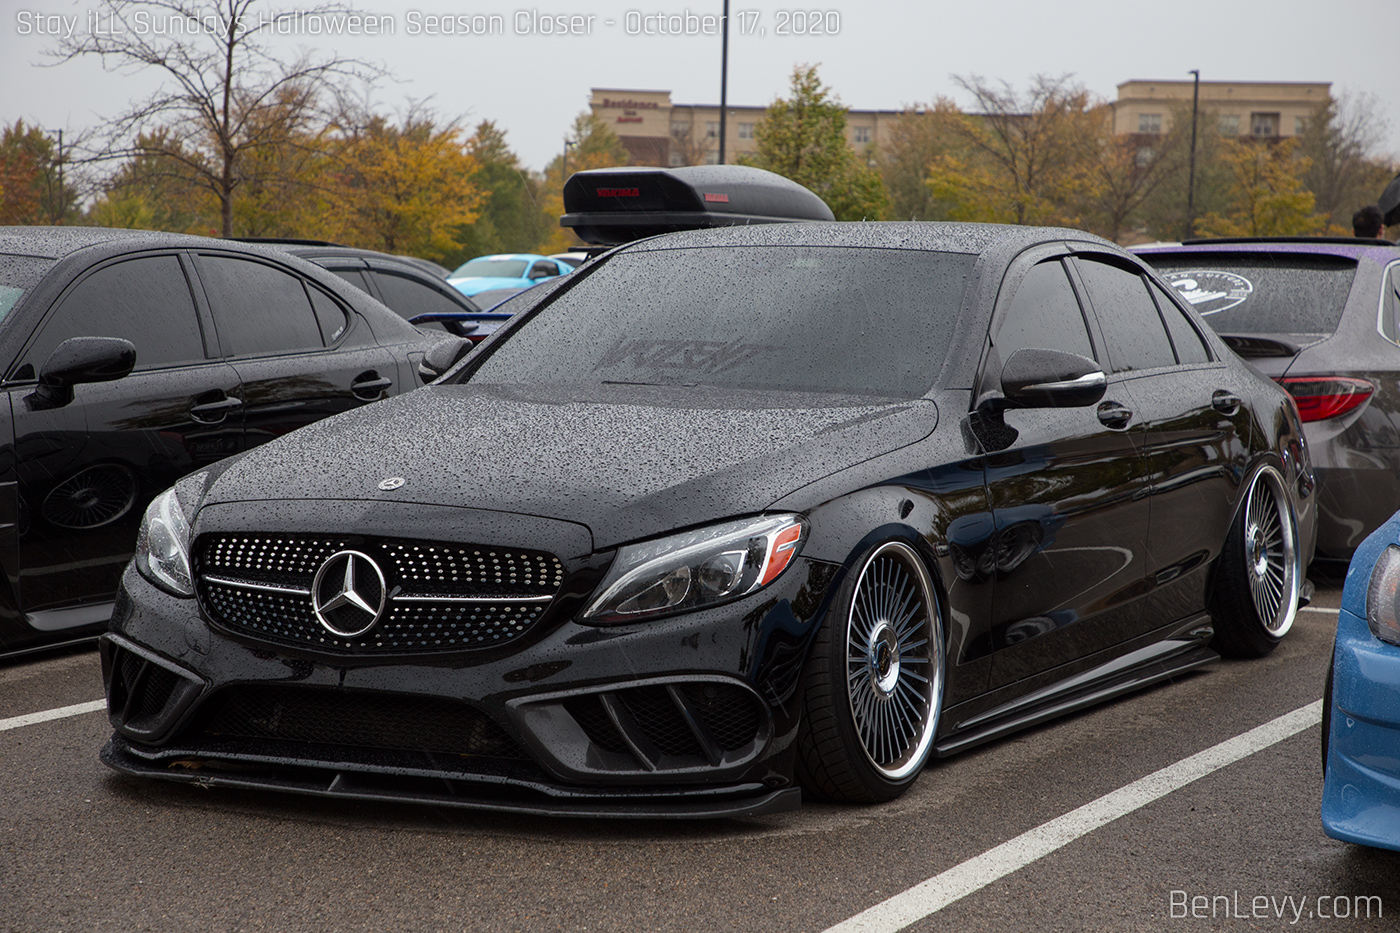 Black Mercedes C-Class